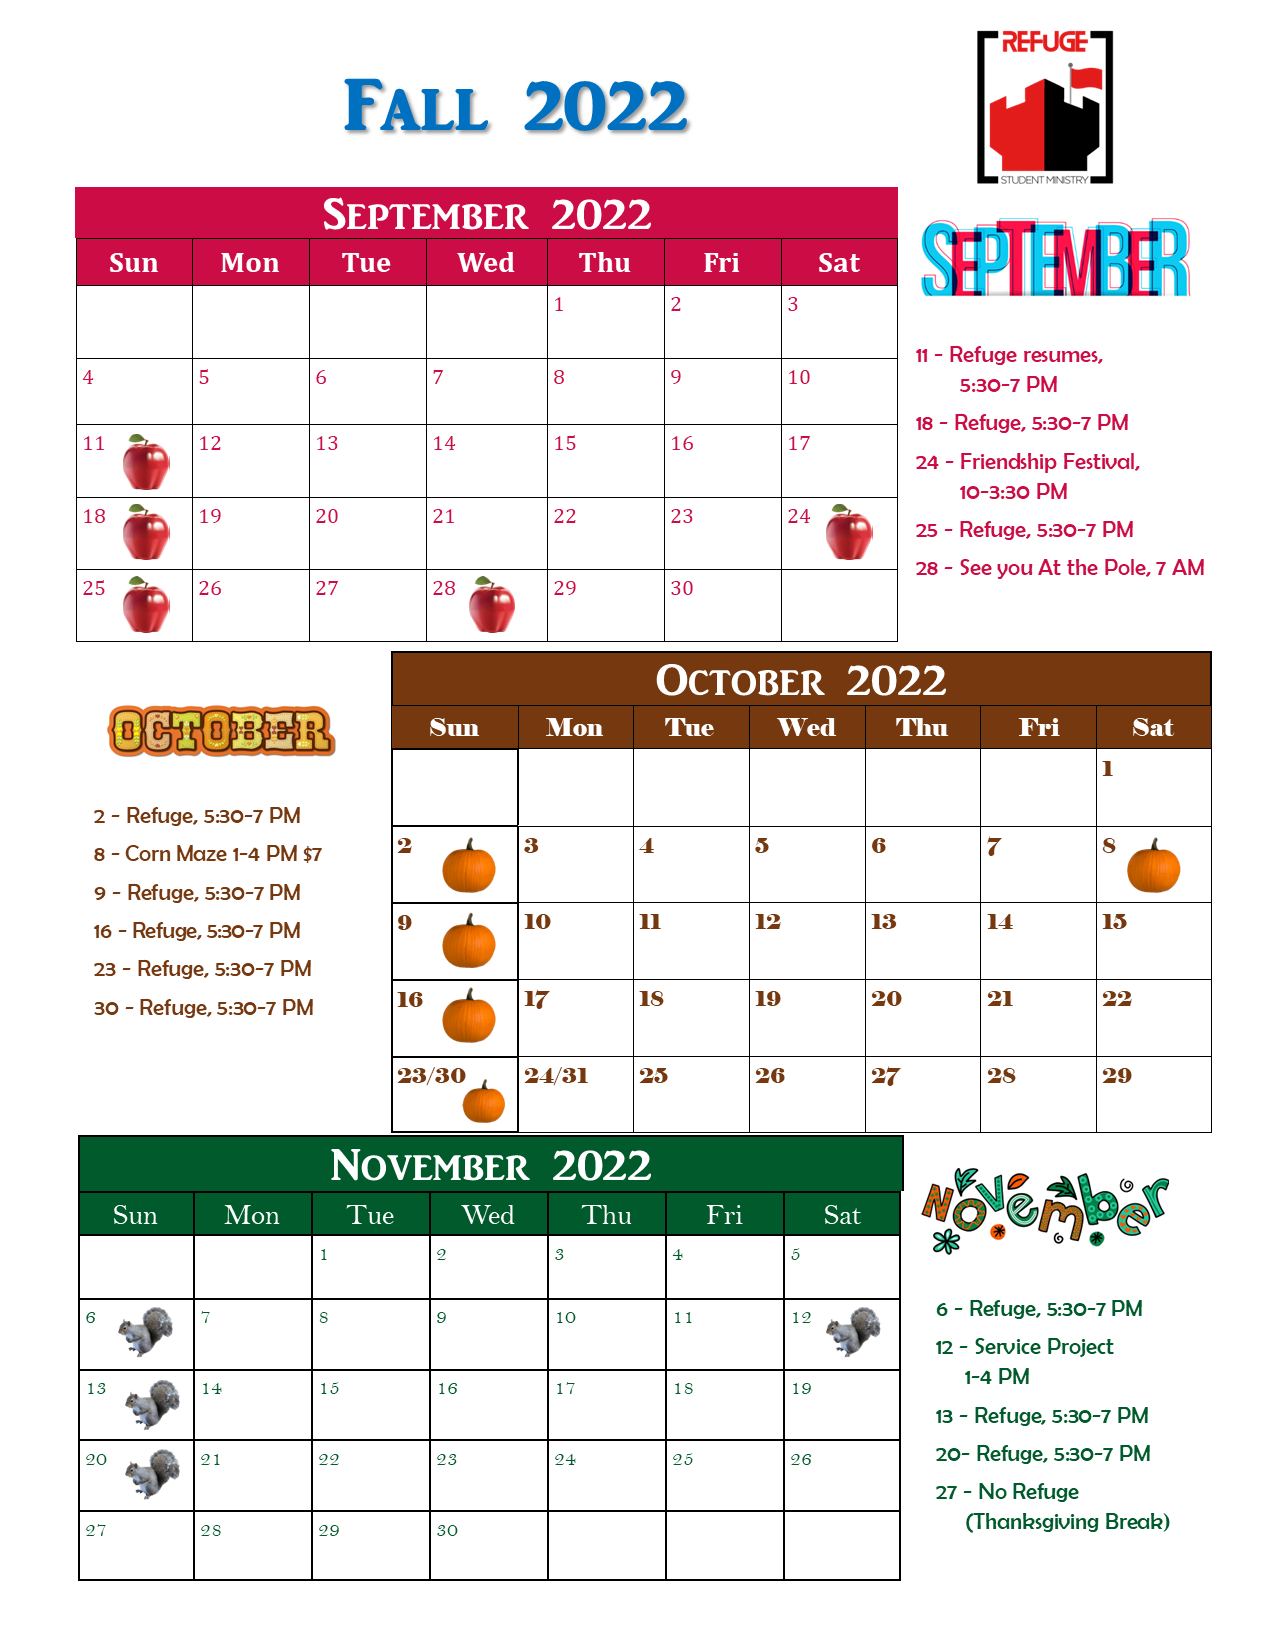 Refuge Fall 2022 calendar